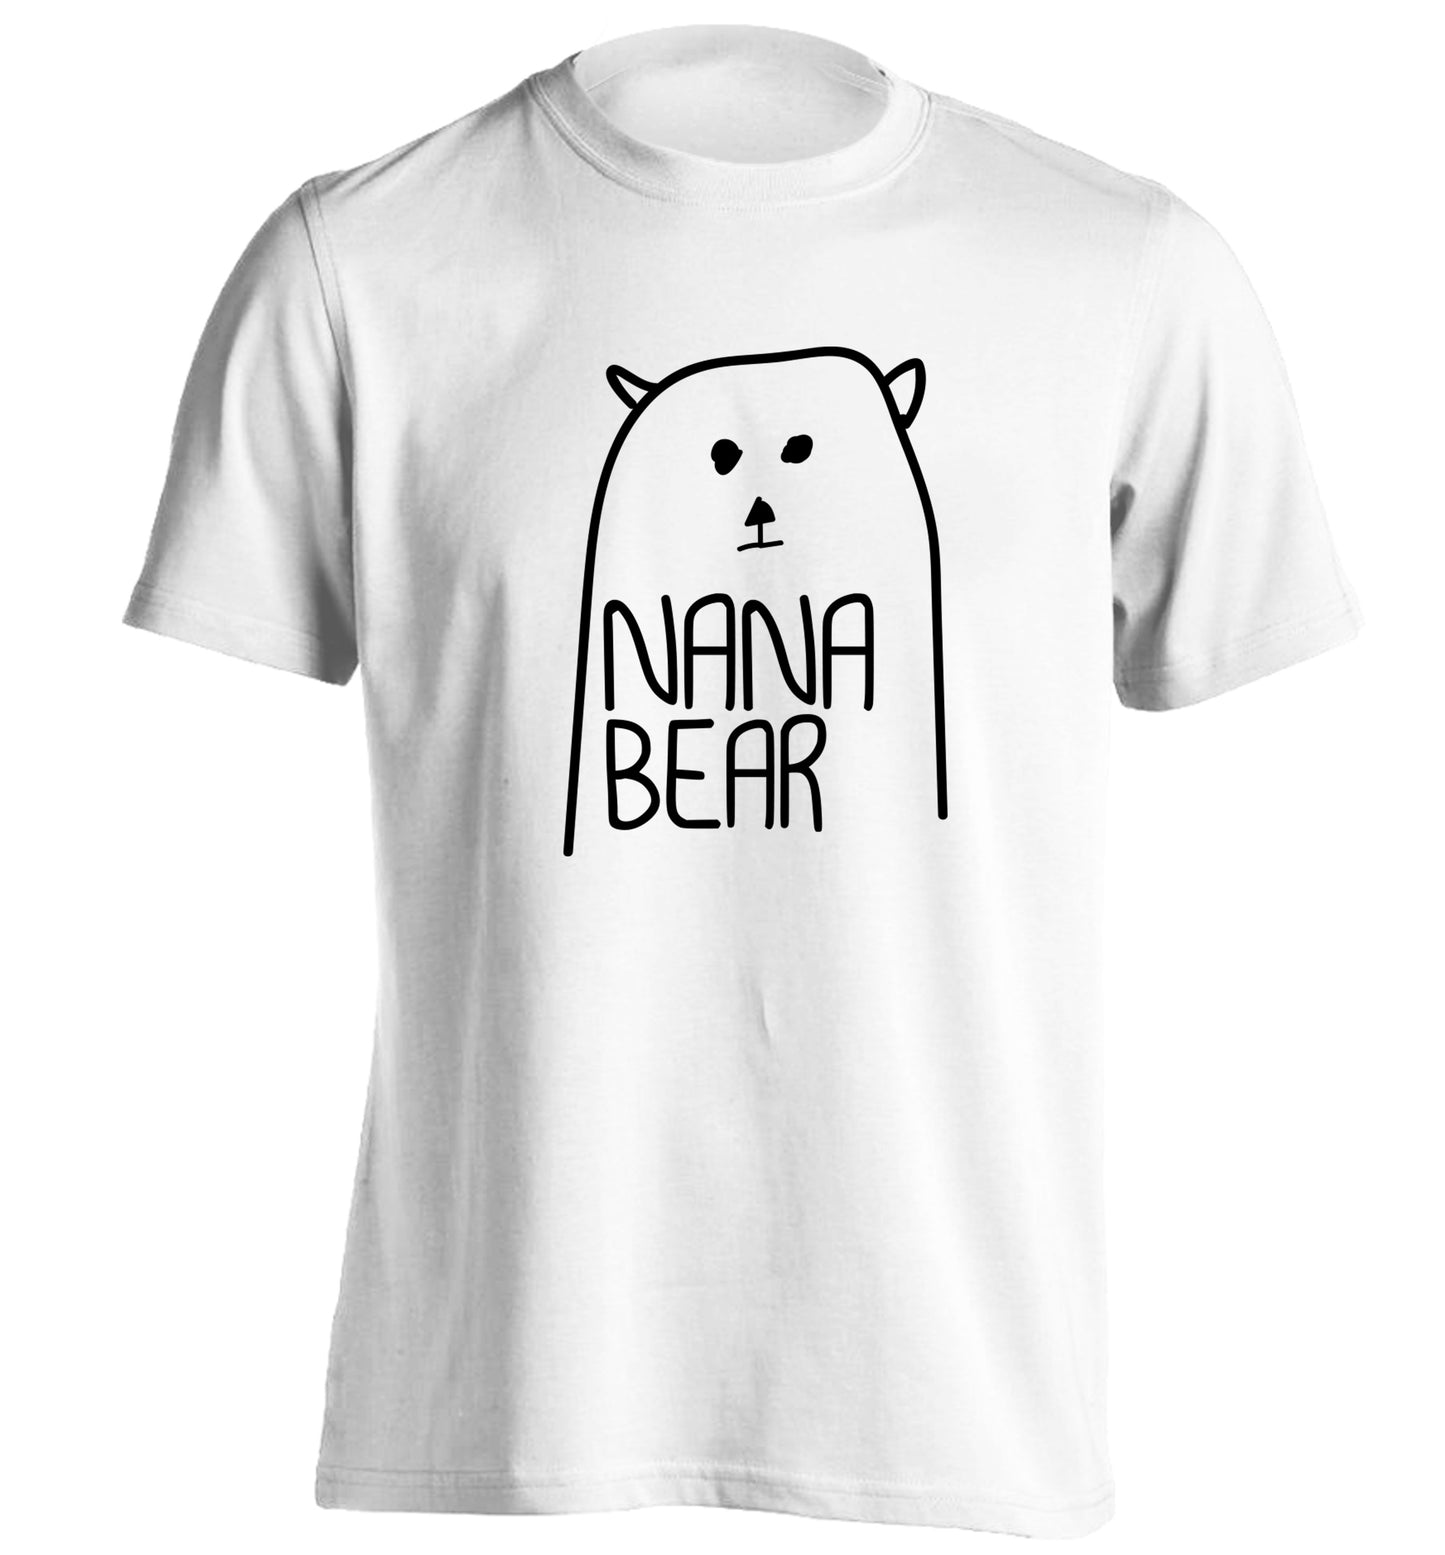 Nana bear adults unisex white Tshirt 2XL